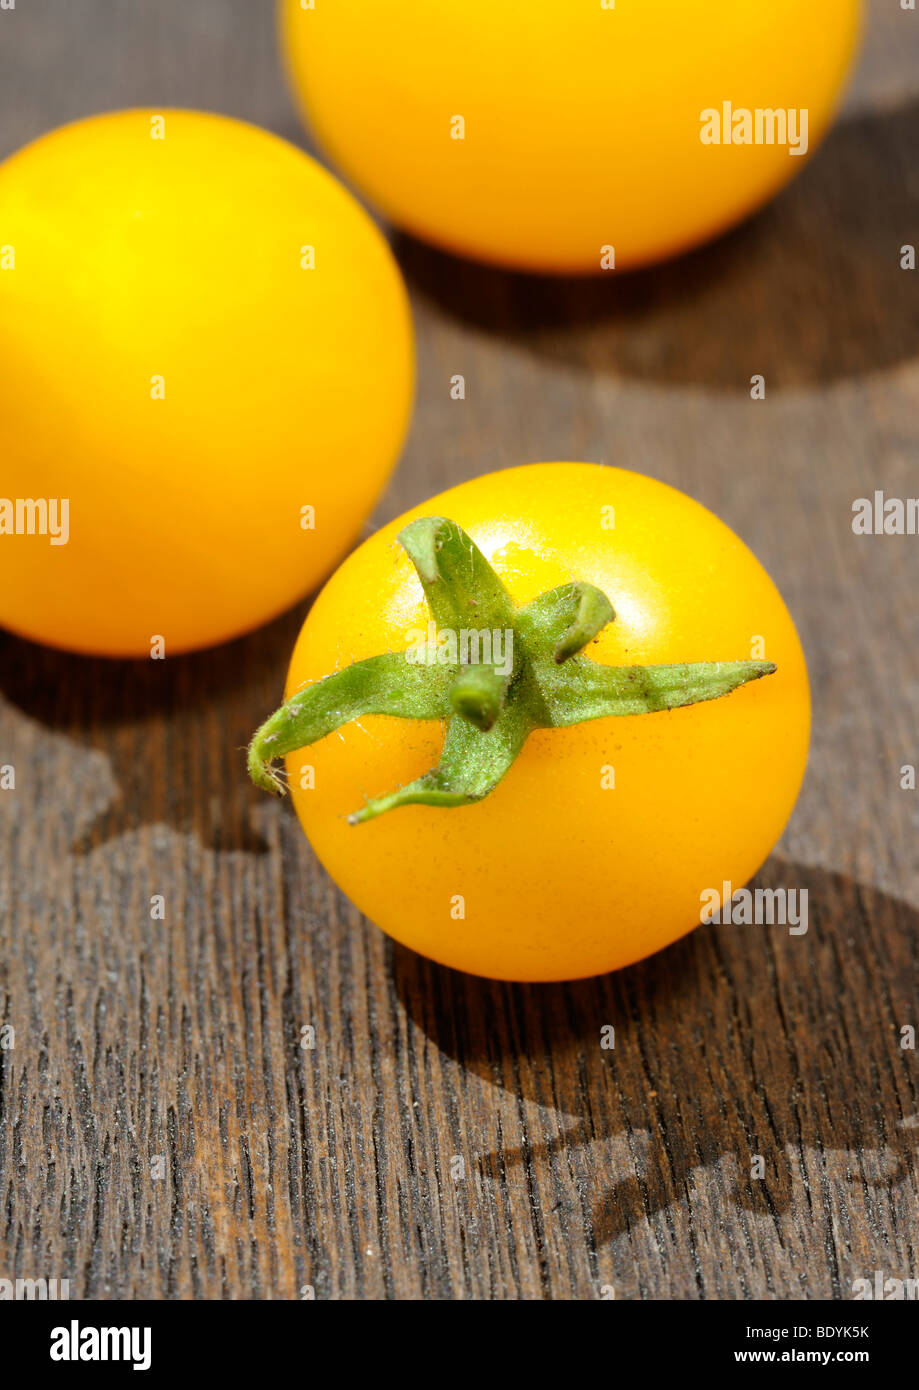 Yellow tomatoes Stock Photo